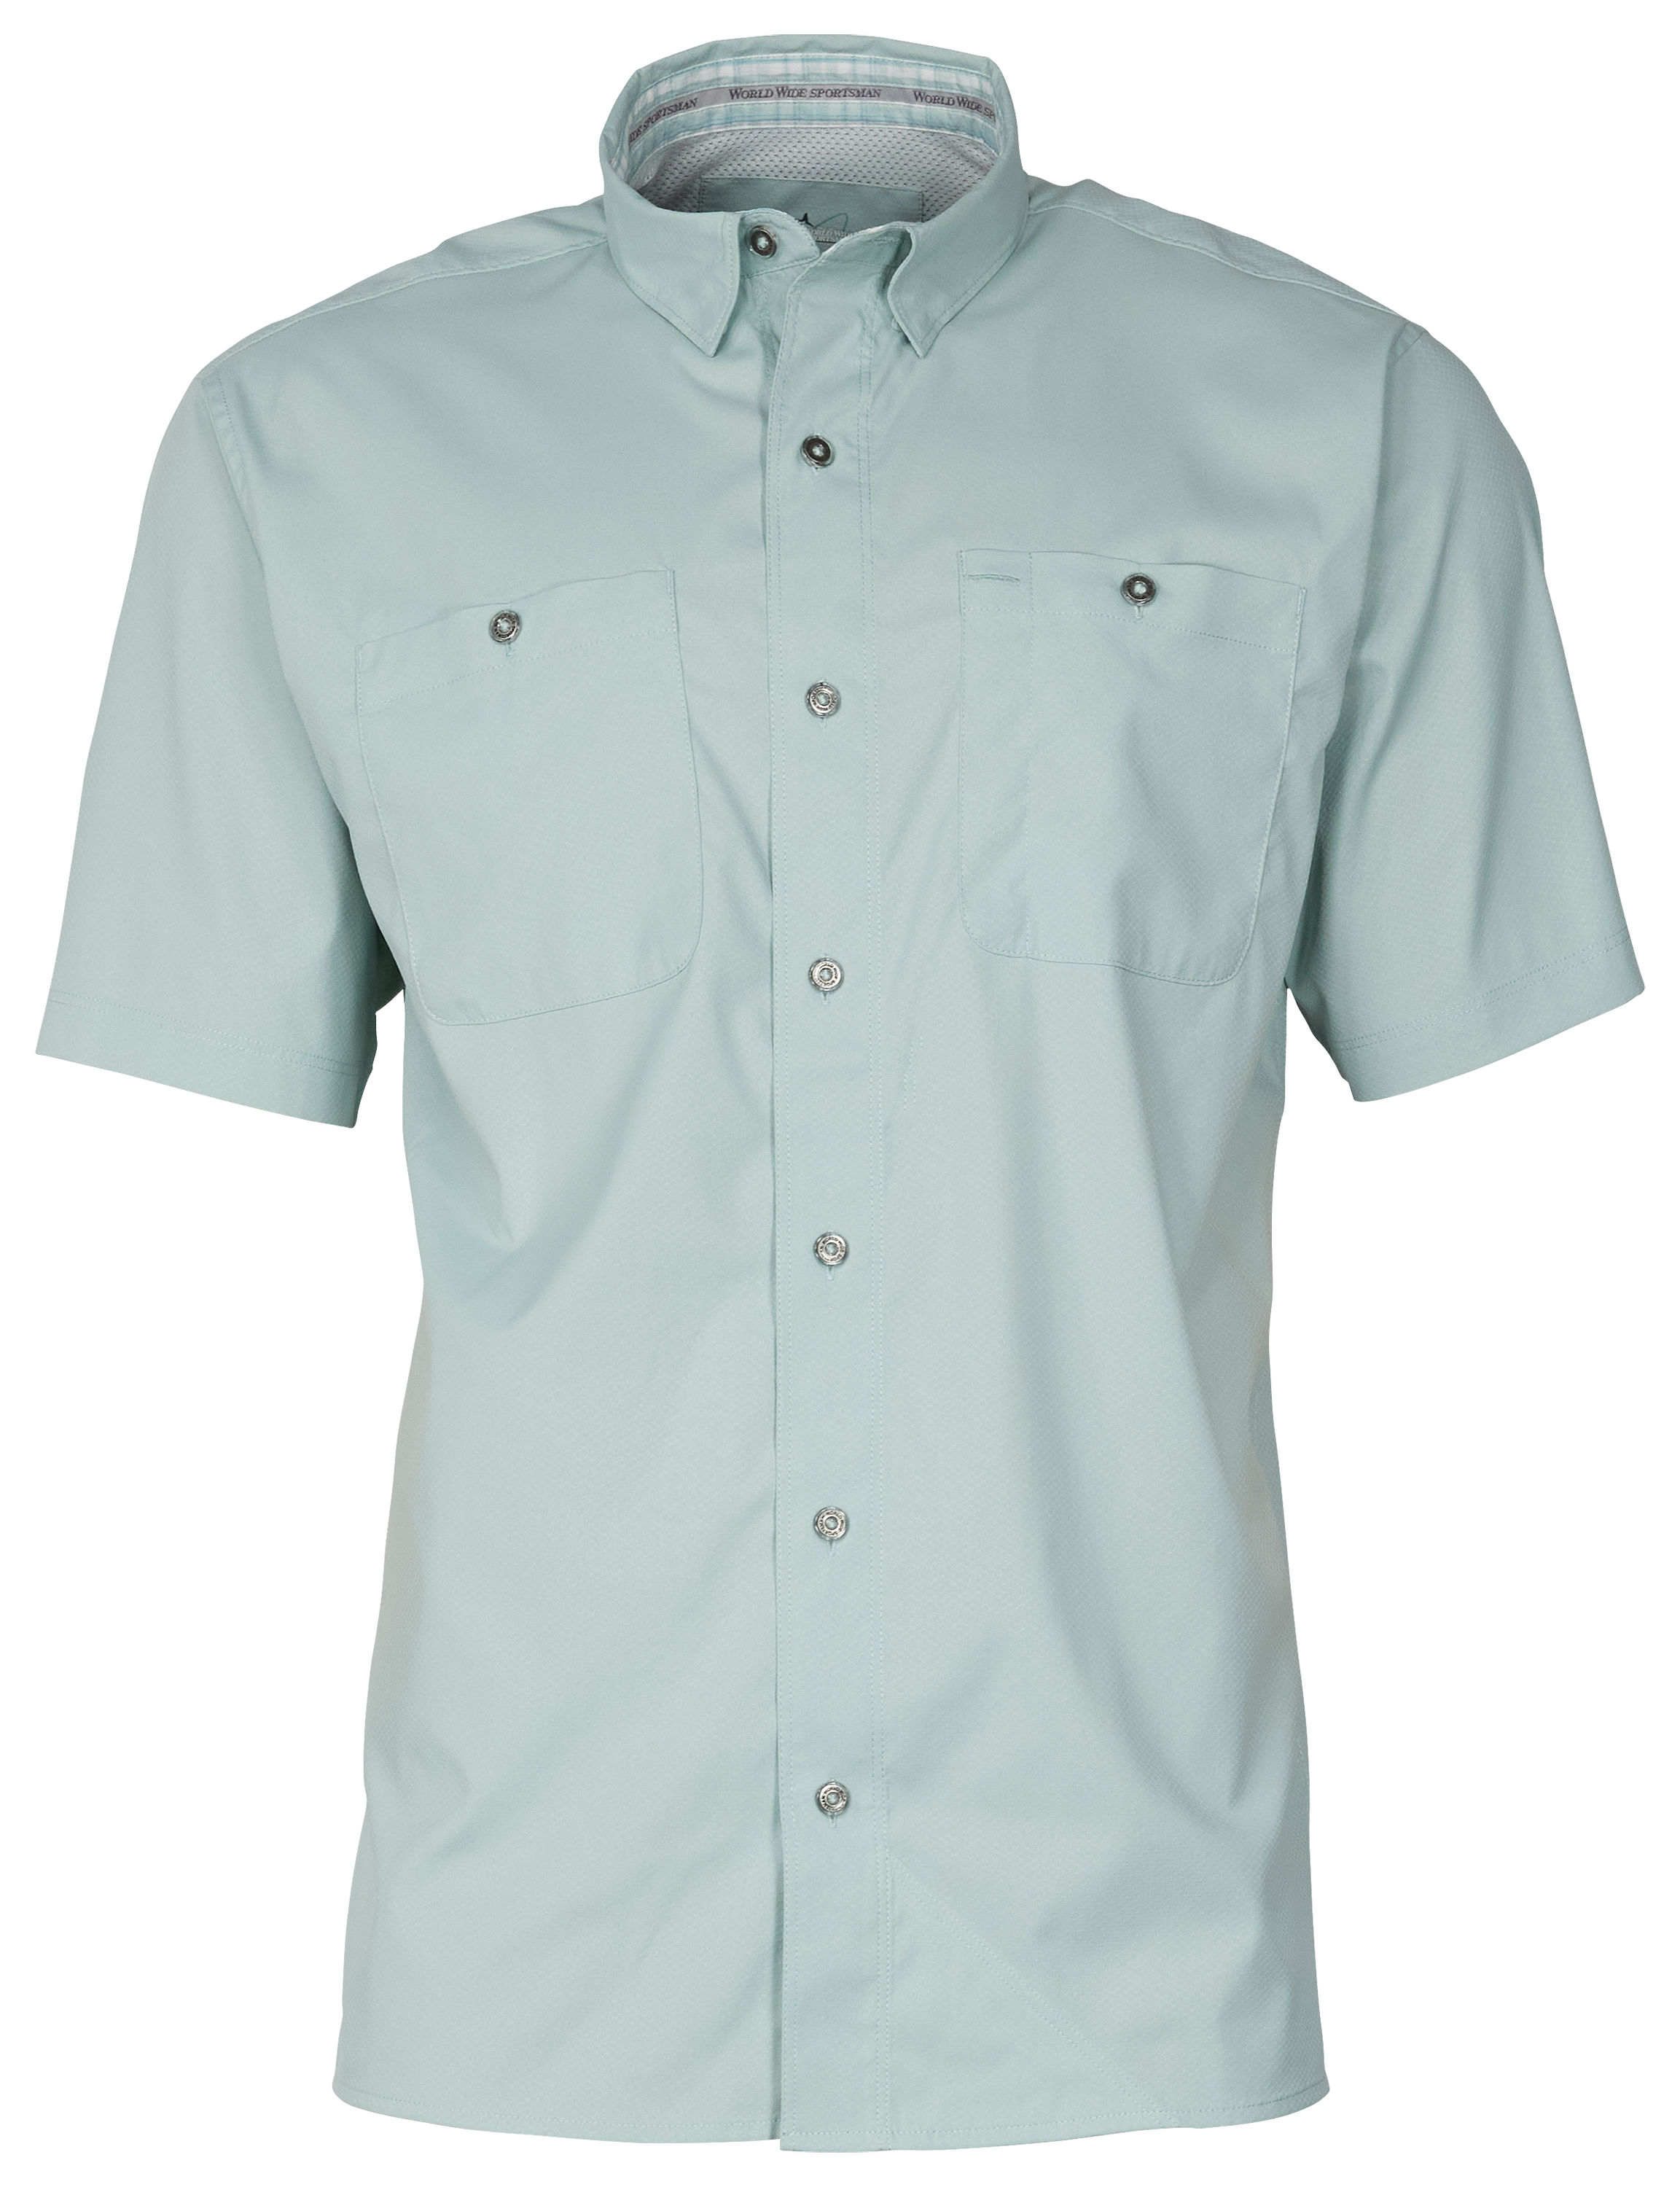 World Wide Sportsman Ultimate Angler Solid Short-Sleeve Shirt for Men - Harbor Gray - XL